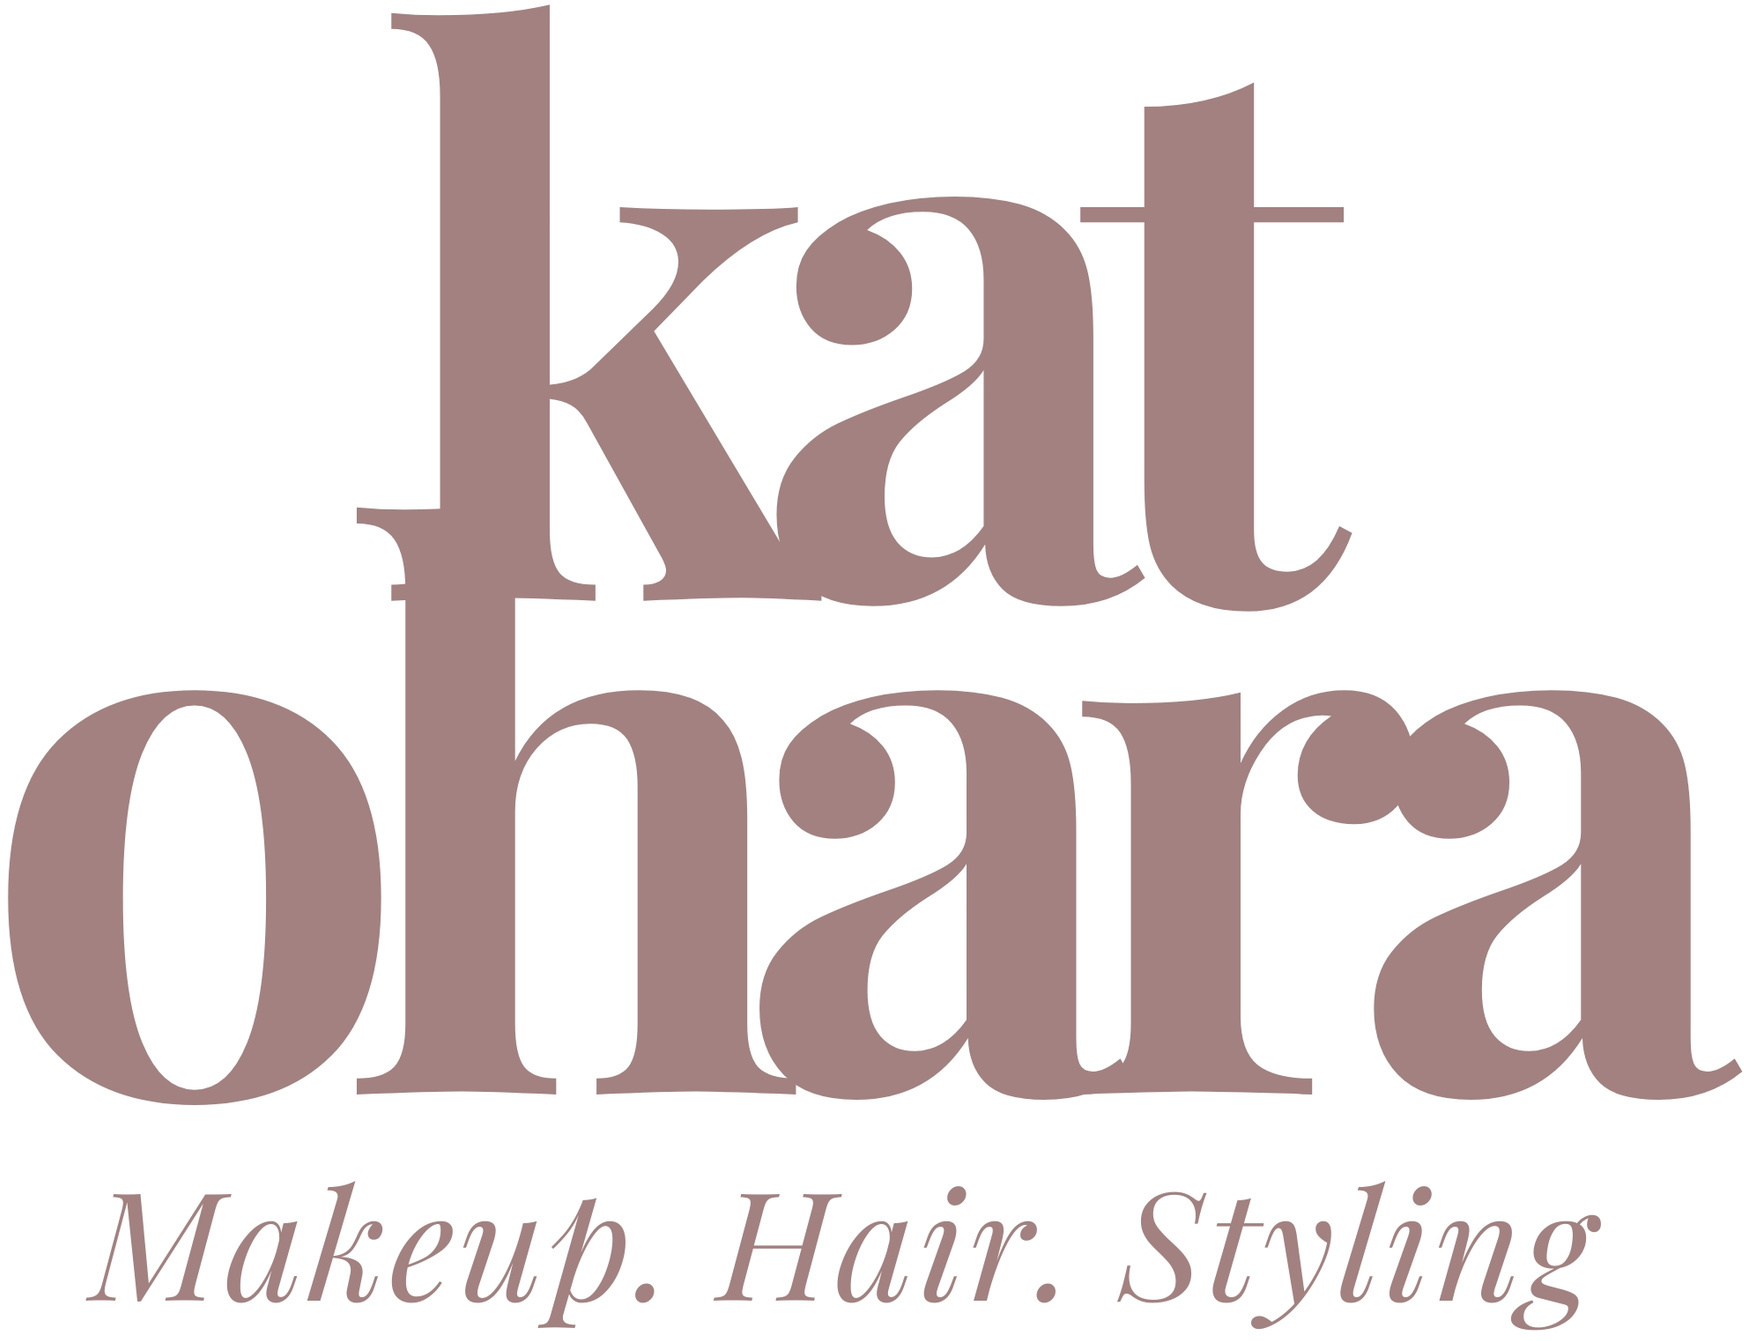 Kat O'Hara Portfolio